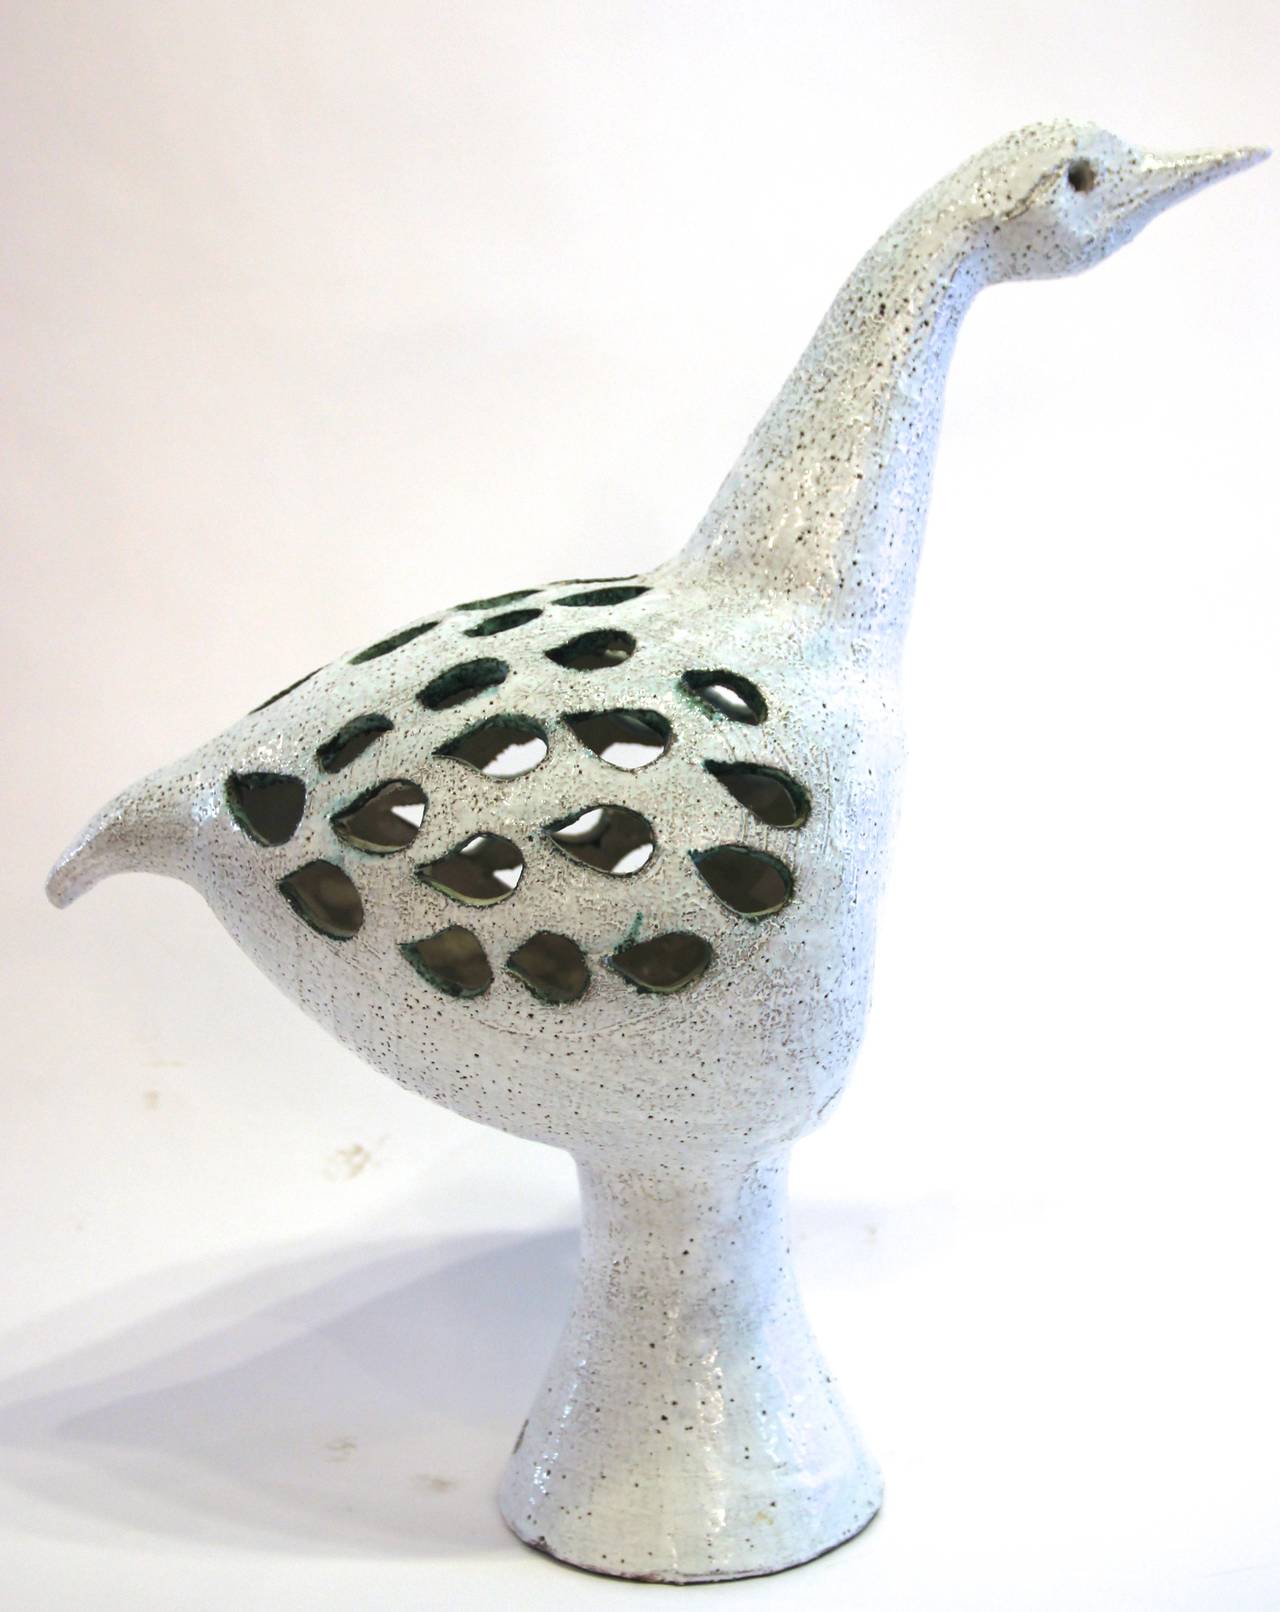 Glazed Ceramic bird Vallauris,
Signed Camos vallauris,
circa 1960, France.
Height: 52 cm, width 20 cm, depth: 48 cm.